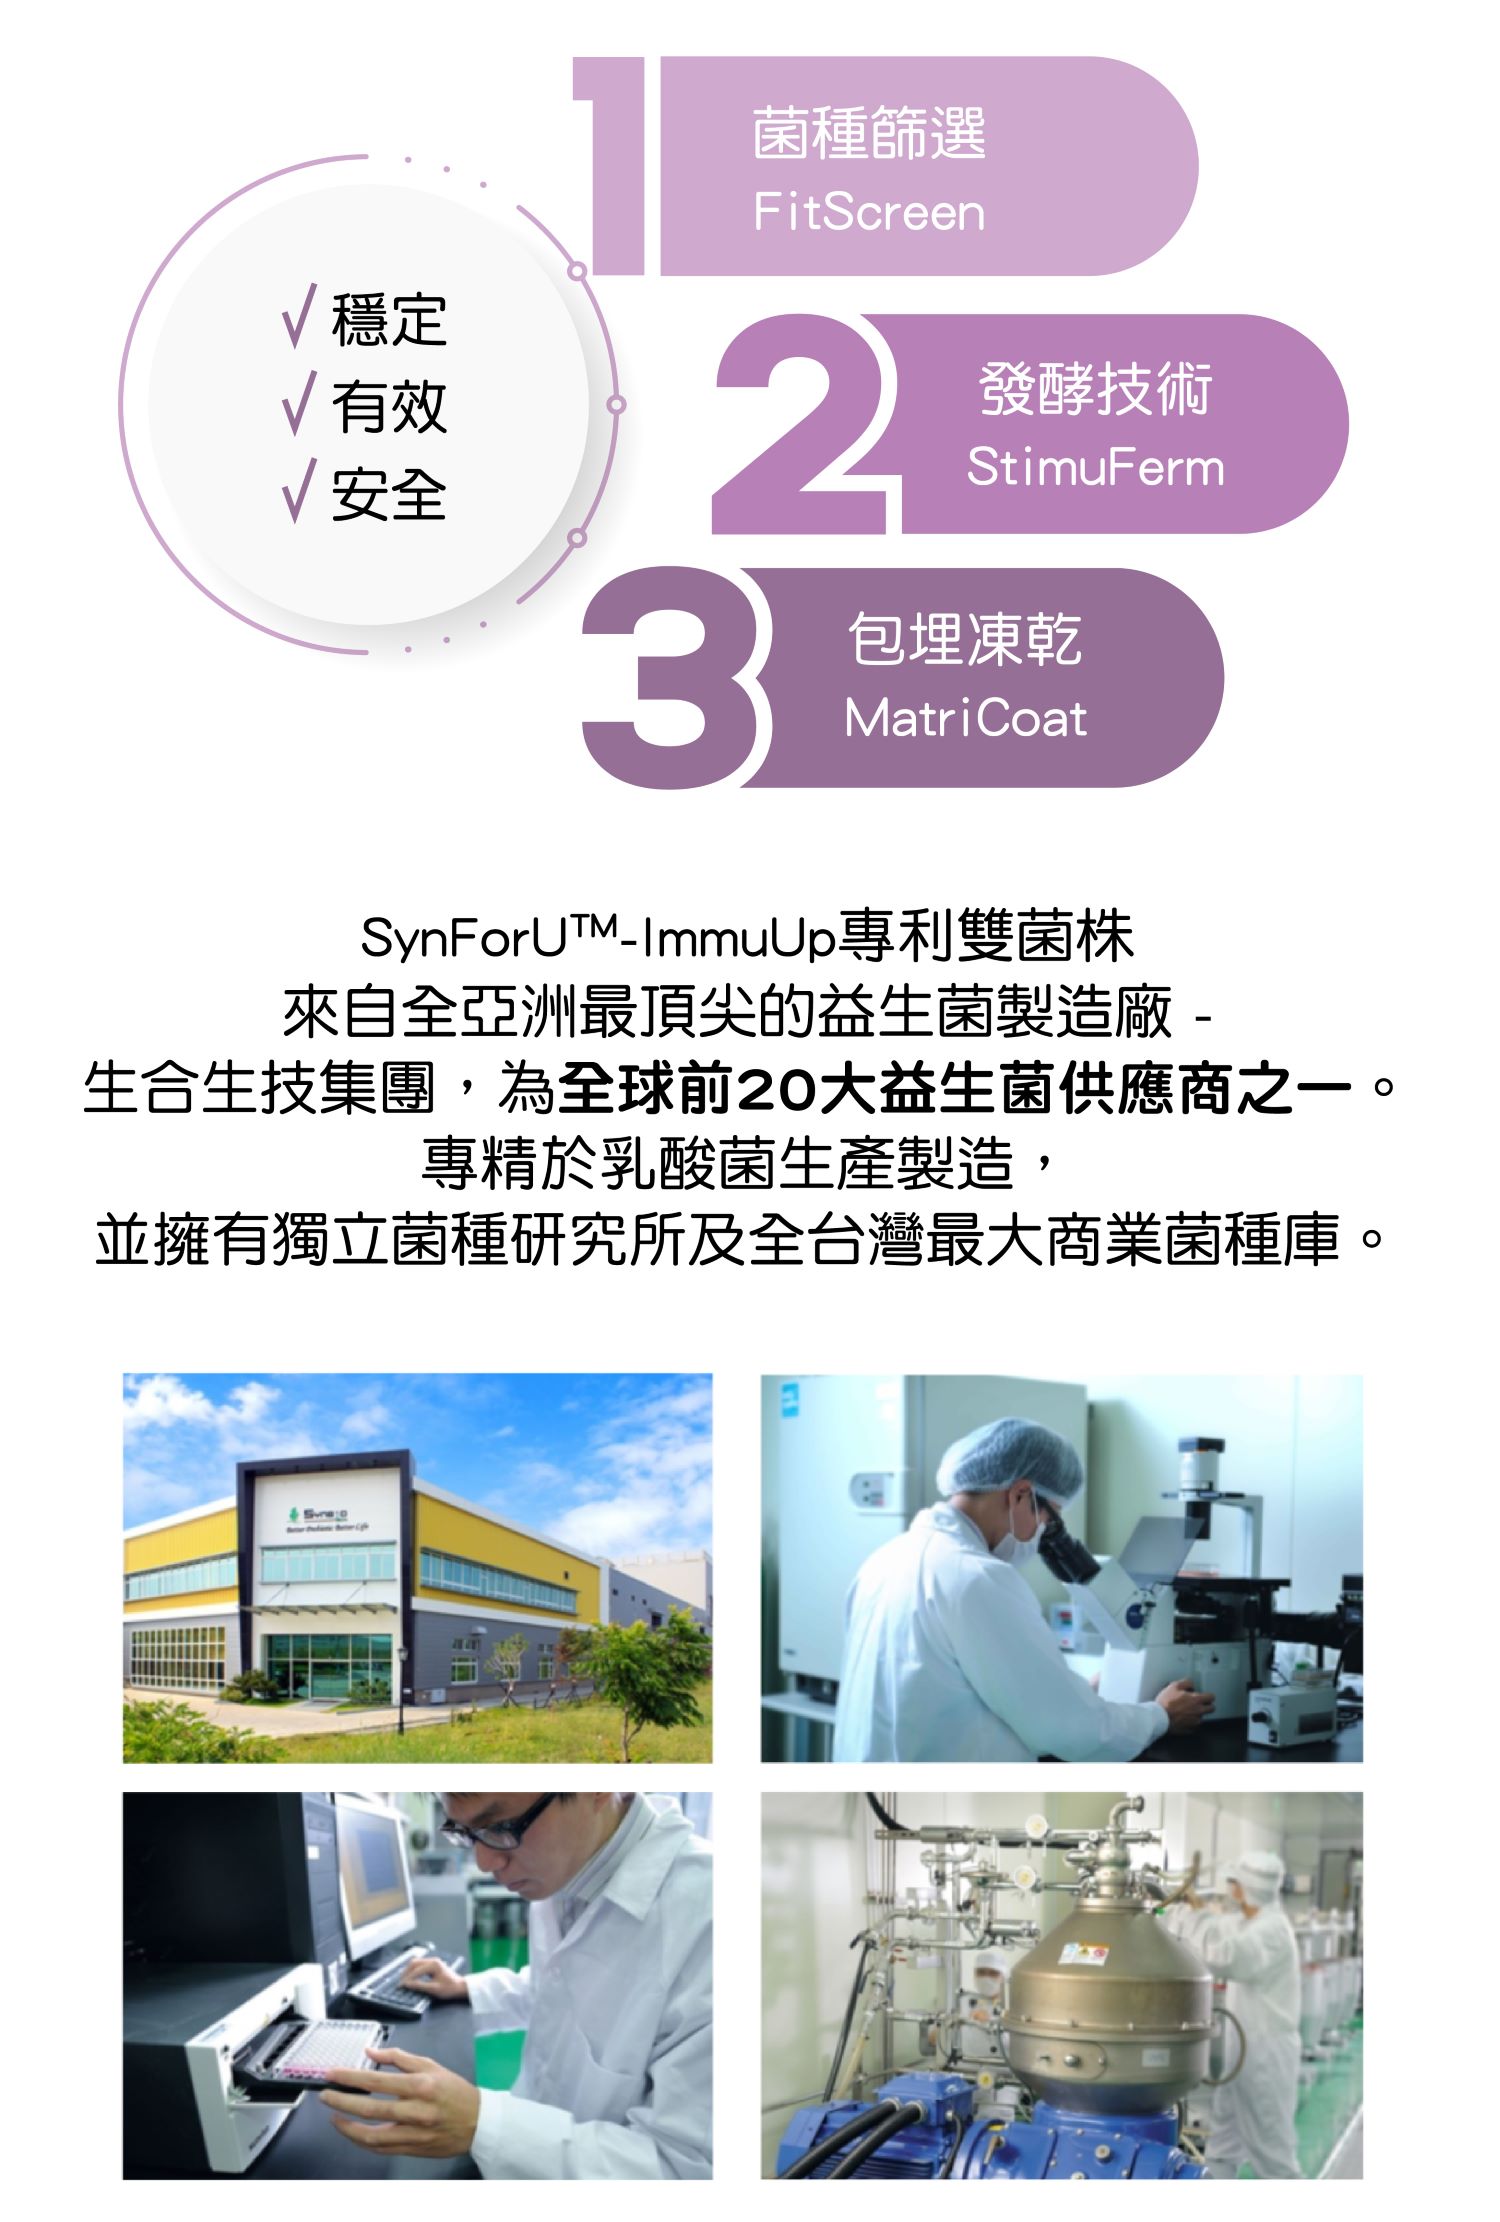 SynForU™-ImmuUp專利雙菌株來自全亞洲最頂尖的益生菌製造廠 - 生合生技集團，為全球前20大益生菌供應商之一。專精於乳酸菌生產製造，並擁有獨立菌種研究所及全台灣最大商業菌種庫